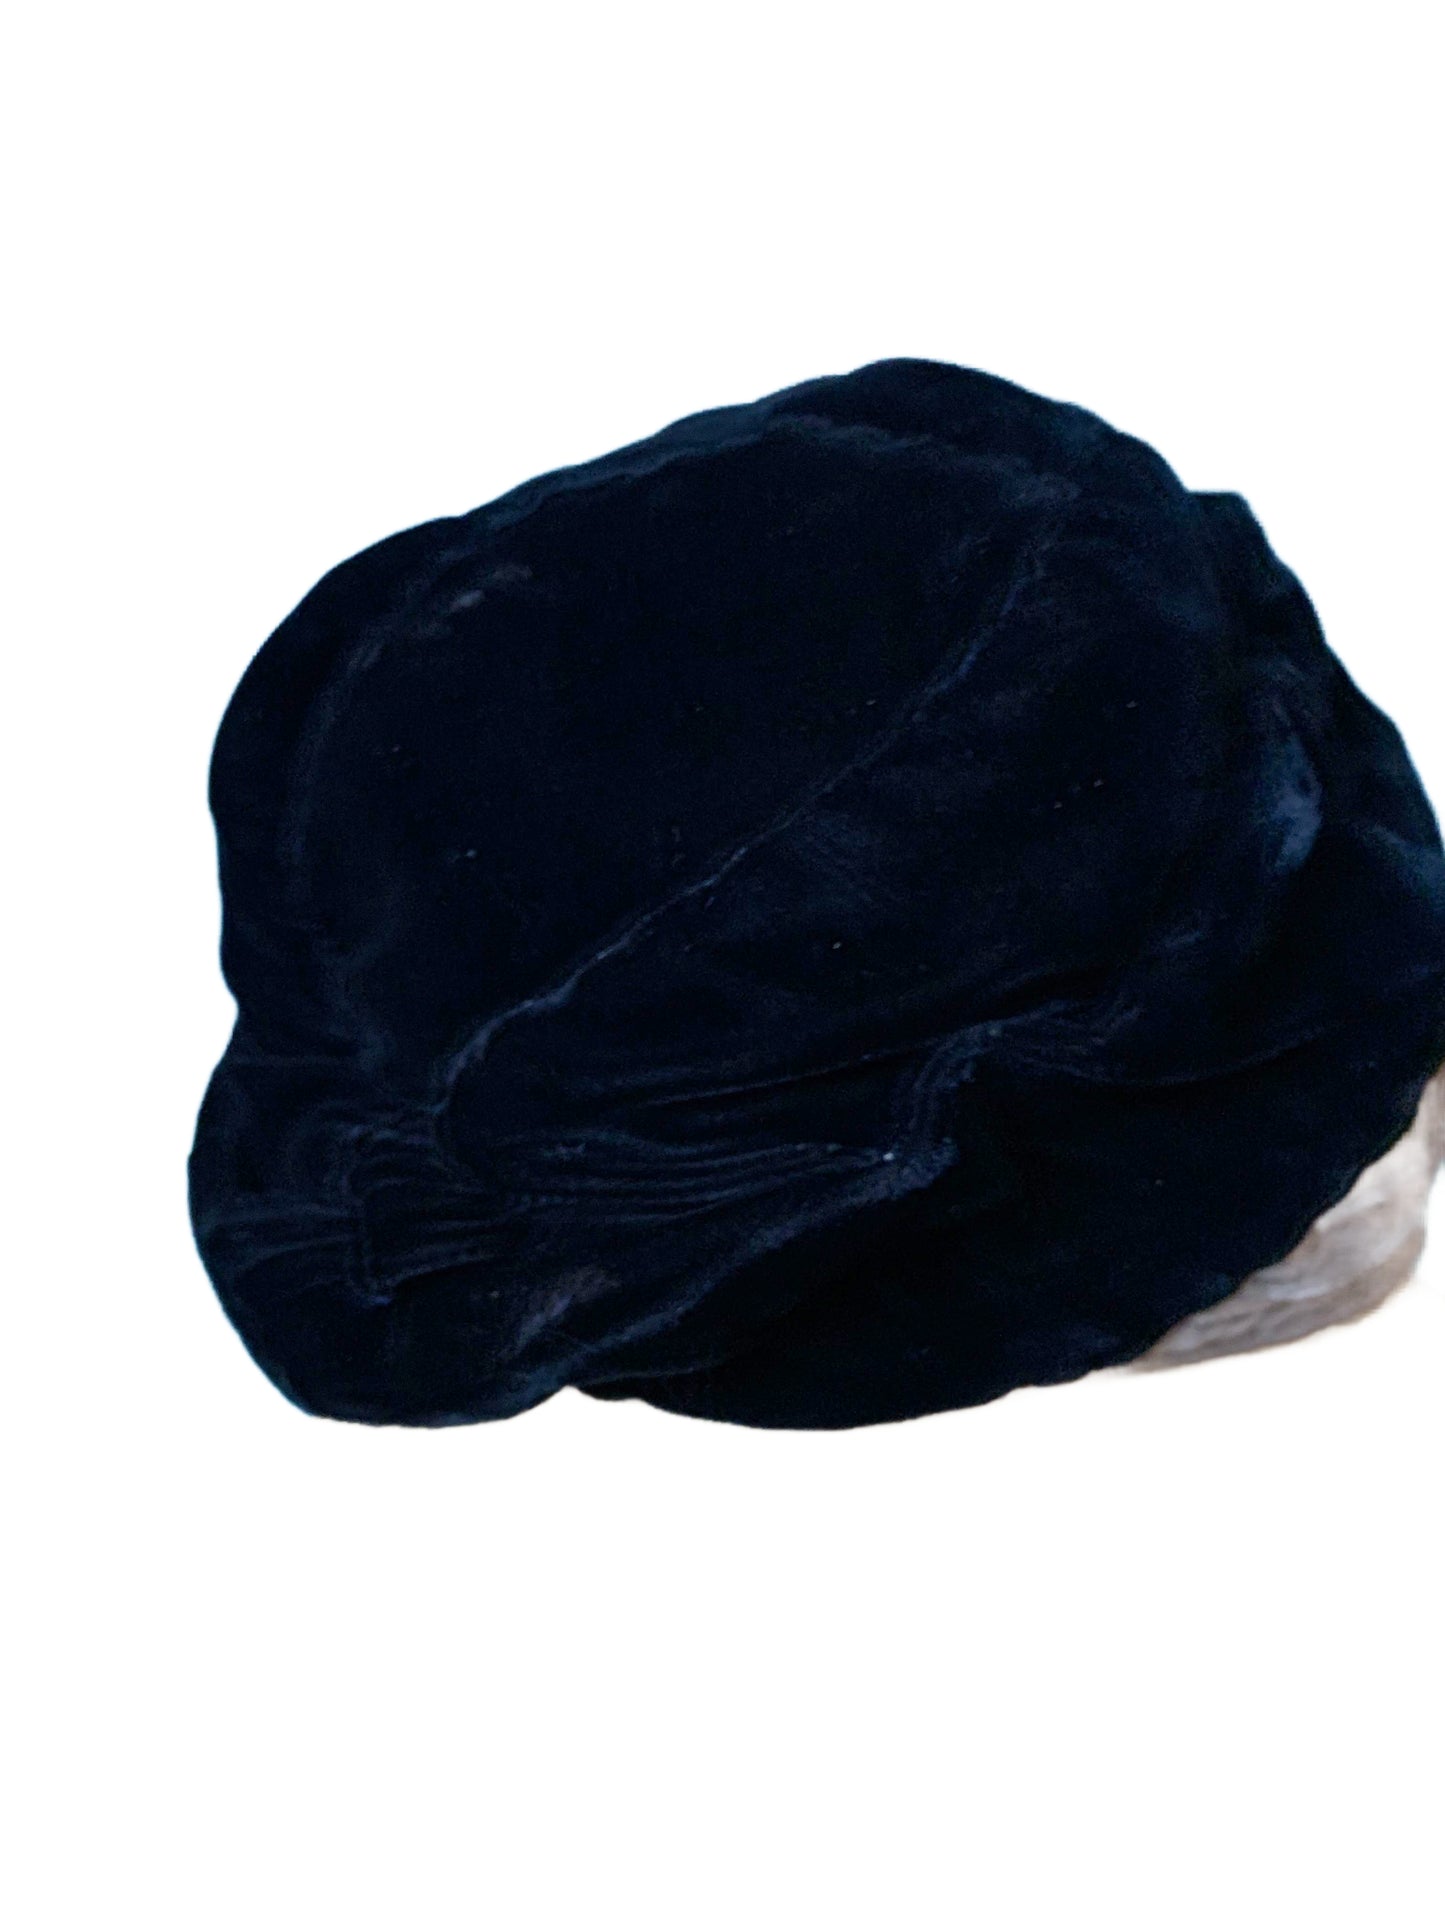 Silk Velvet Black and Golden Tan Close Fit Hat circa 1930s